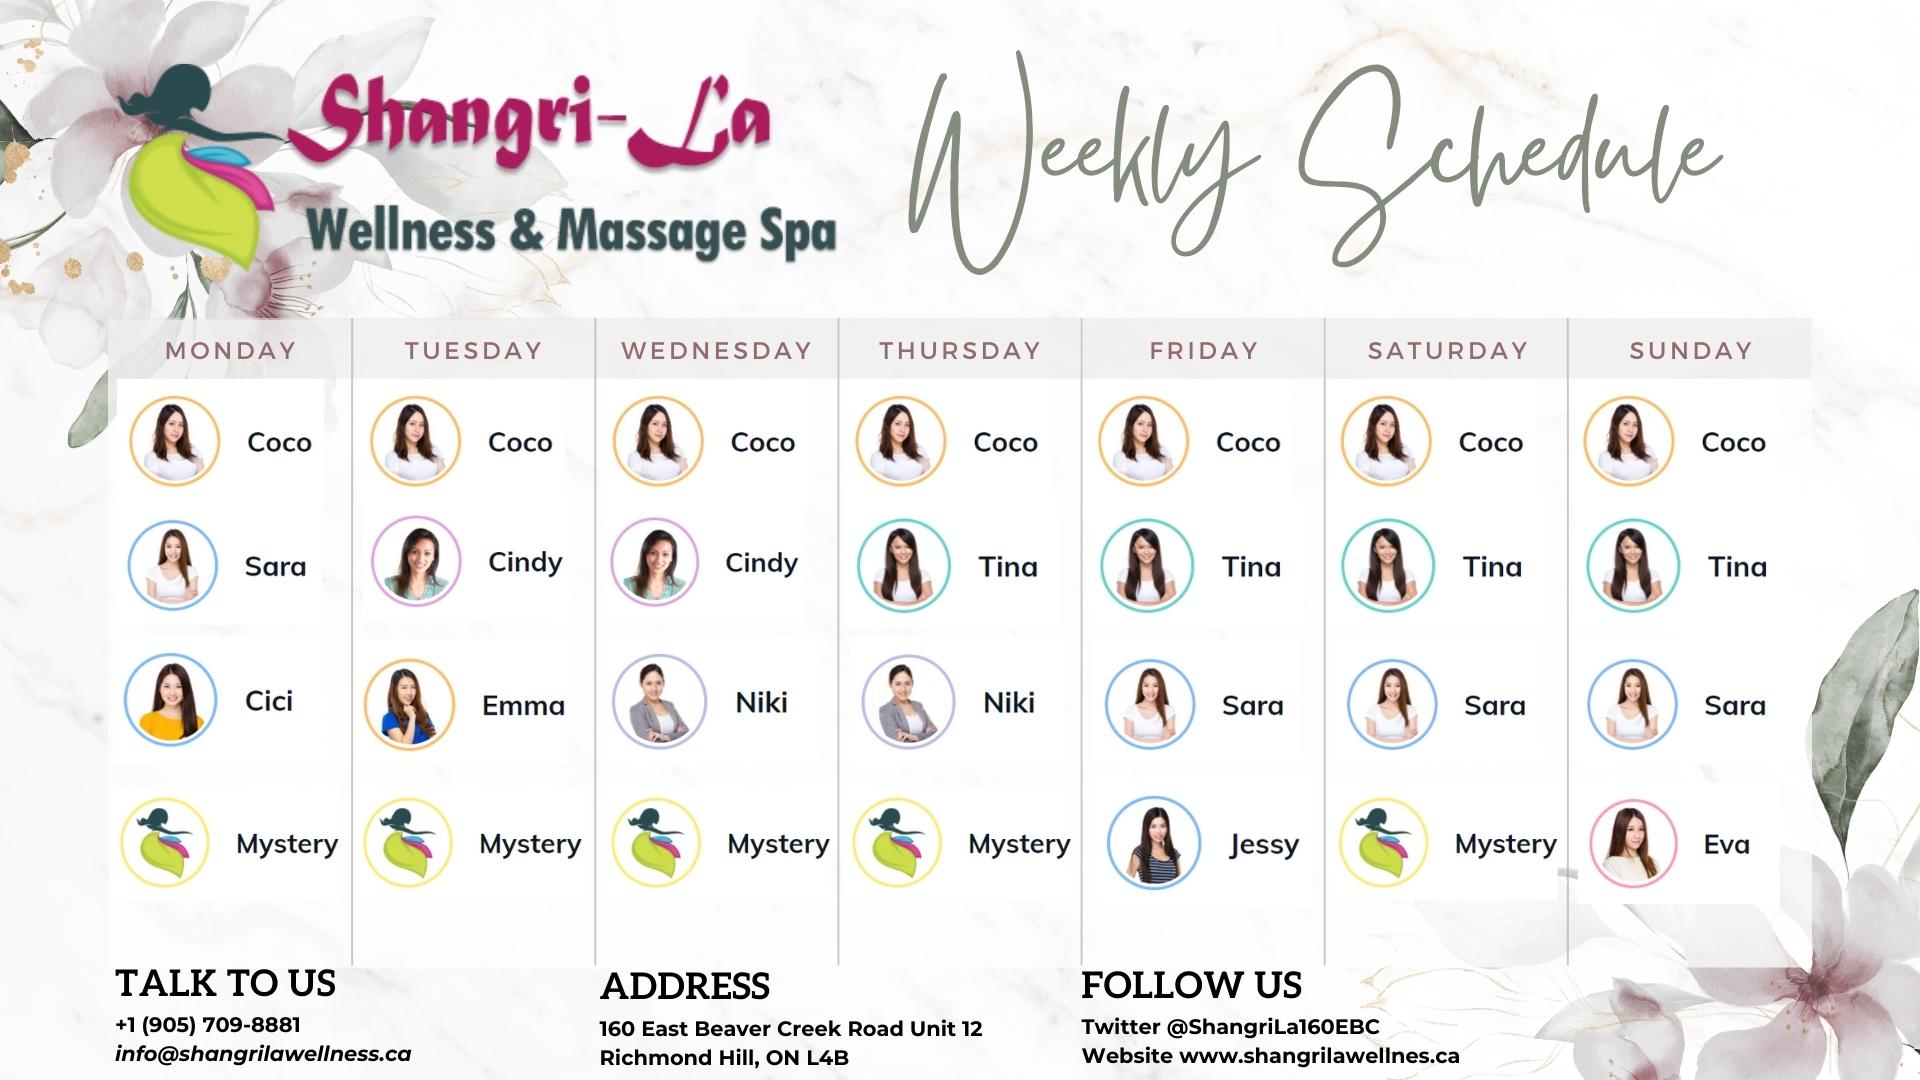 Schedule_Shangri_La_Wellness_Massage_Spa_East_Beaver_Creek_Richmond_Hill_ON